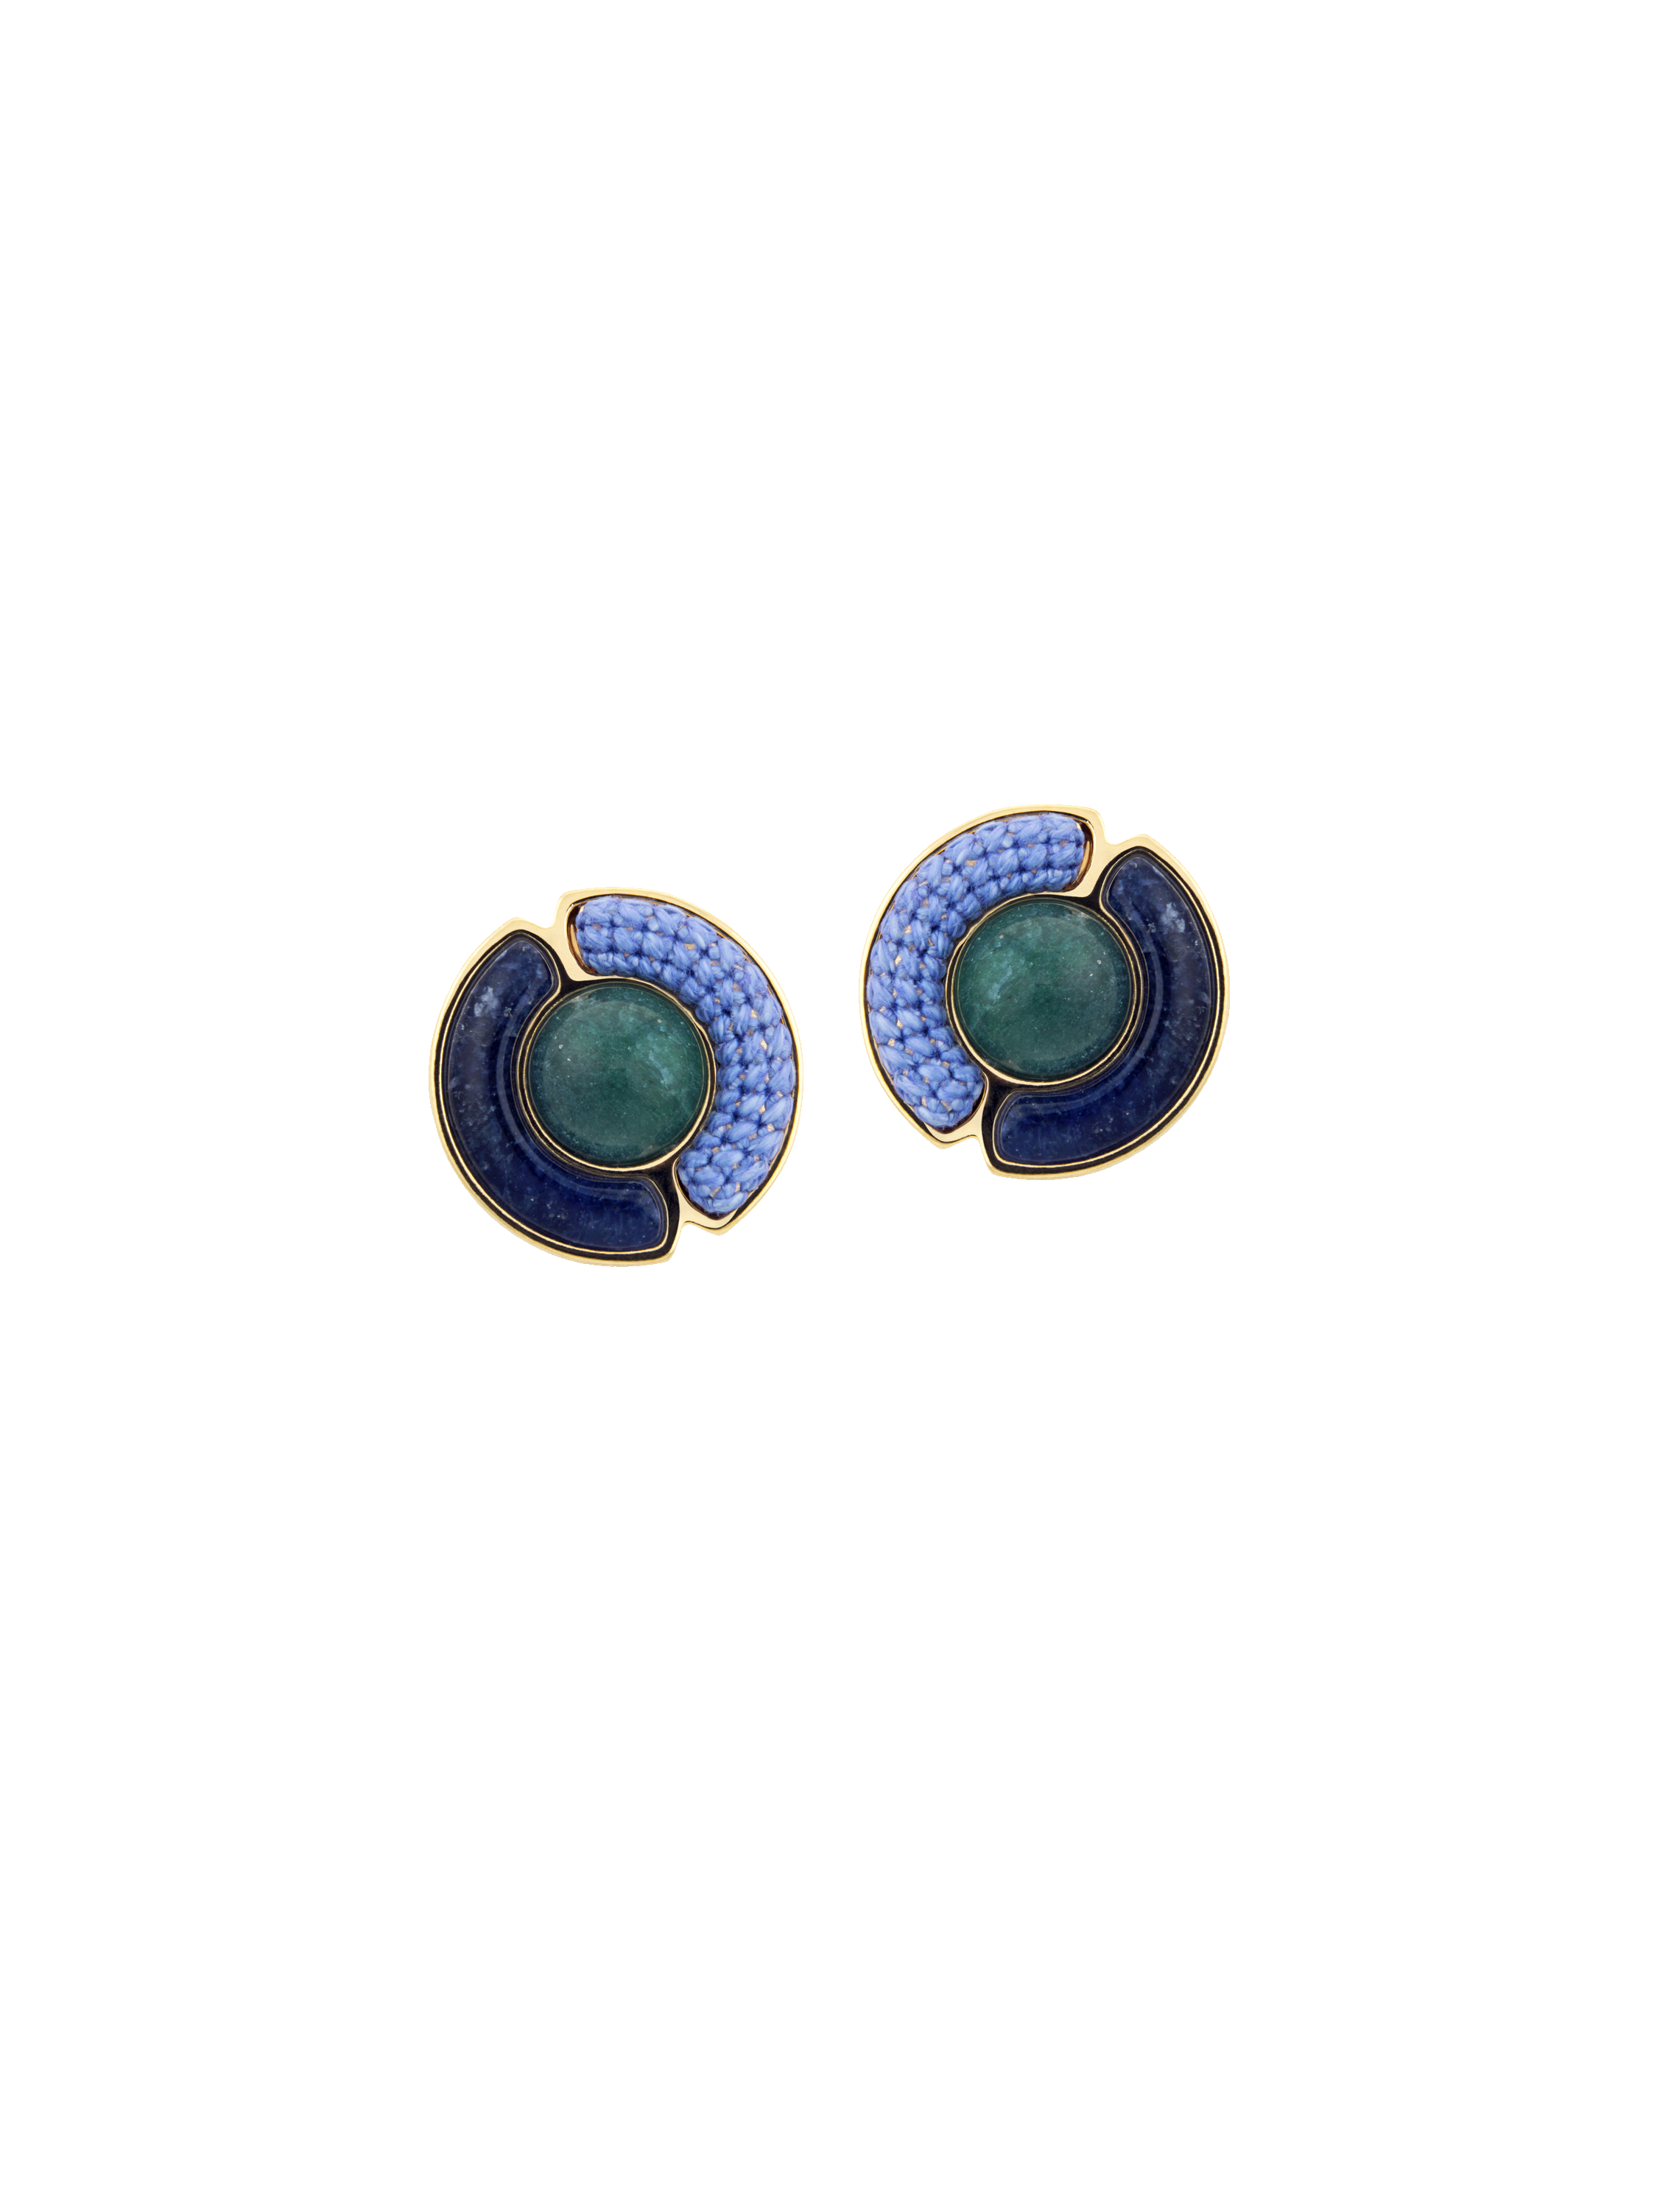 Simultaneous Earrings - Blue